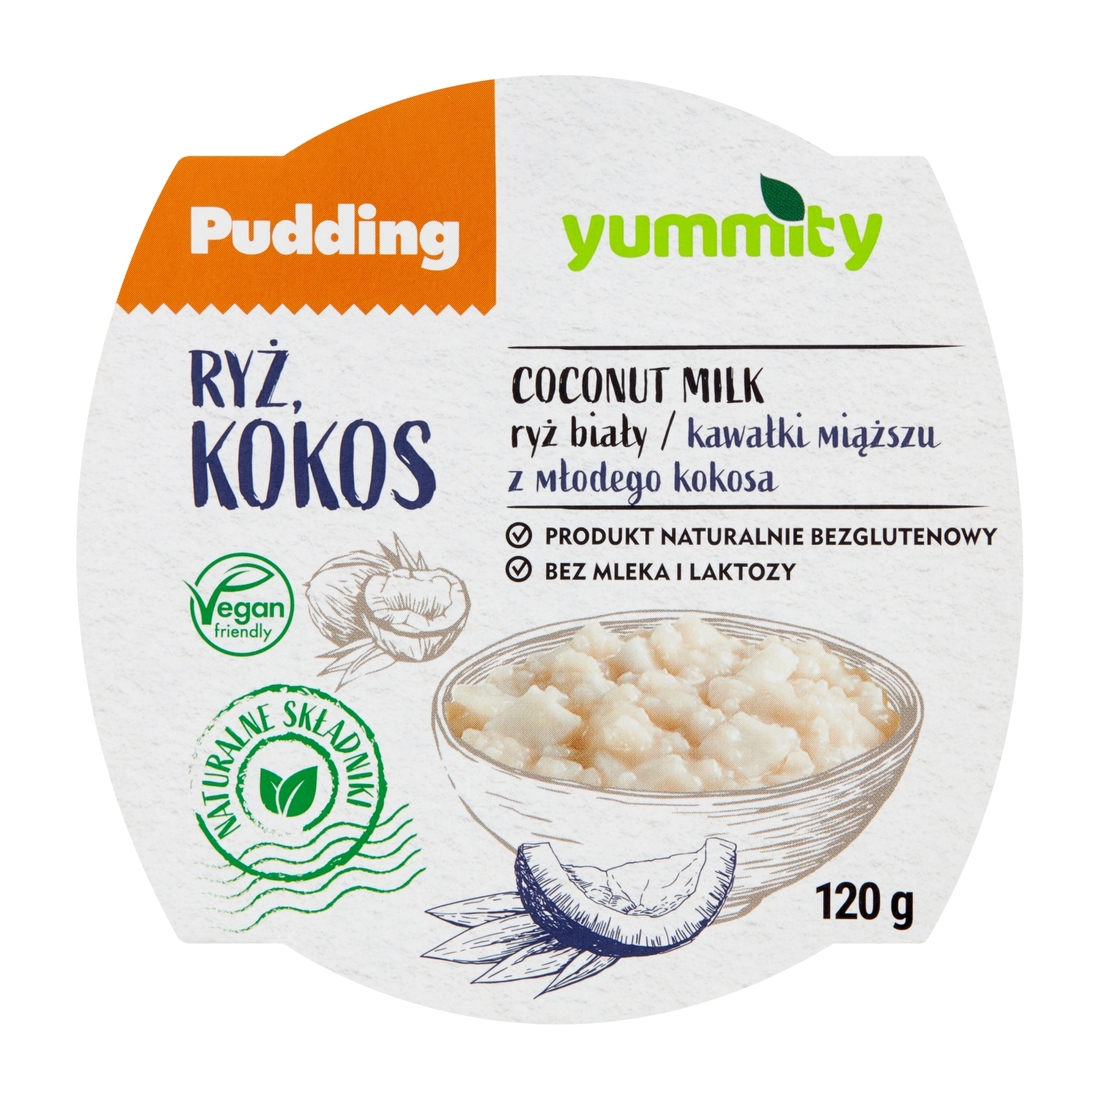 Bezglutenowy pudding ryżowy z kokosem 120g Yummity Yummity